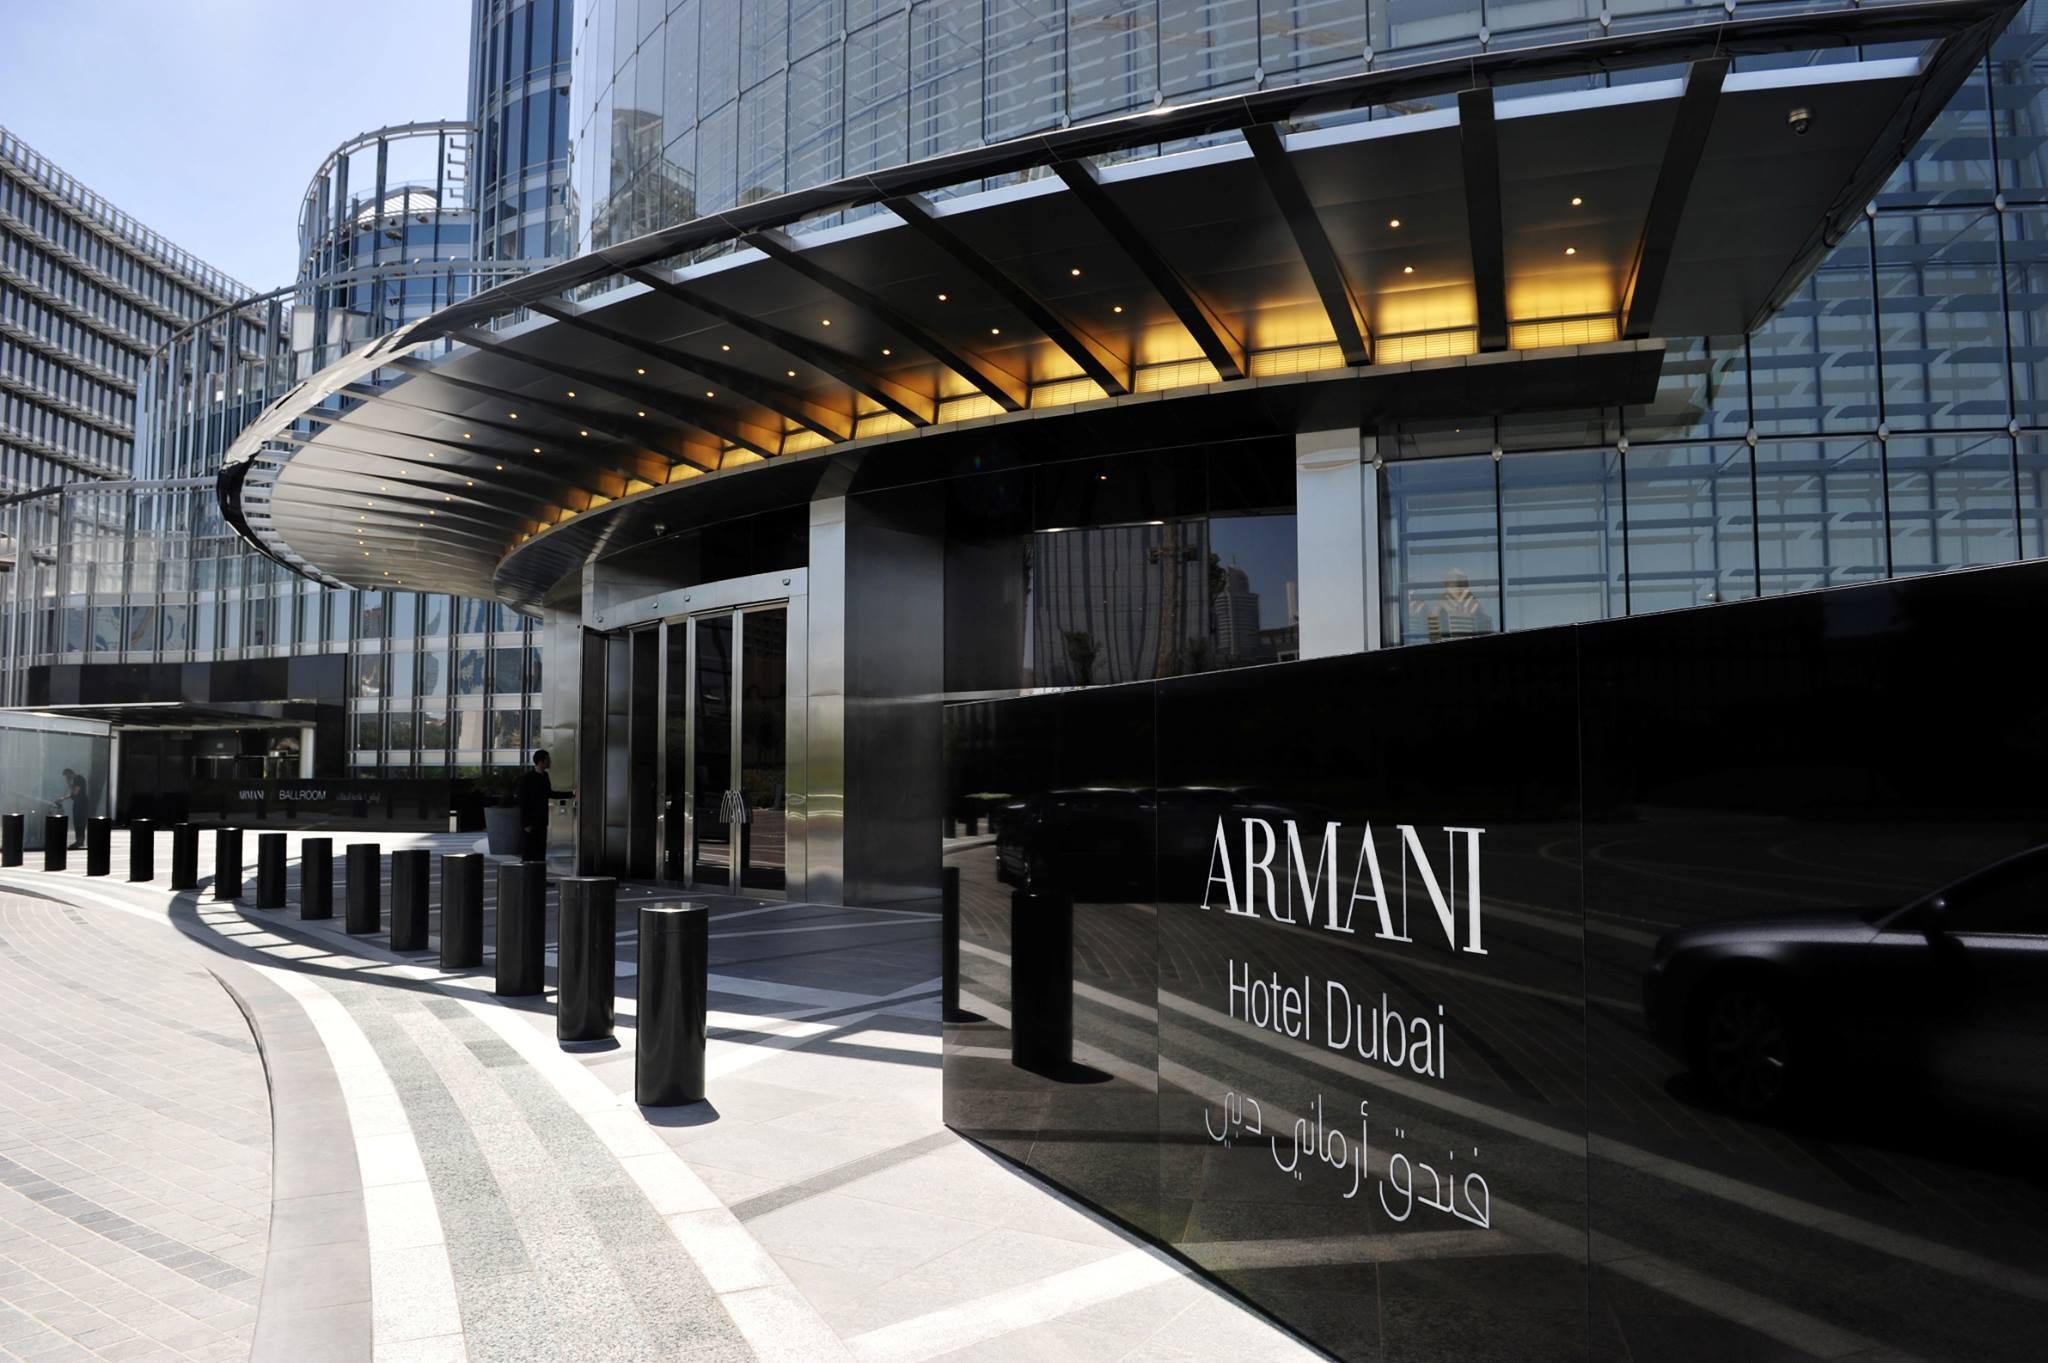 THE LUXURIOUS RAMADAN EXPERIENCE AT THE ARMANI HOTEL DUBAI 